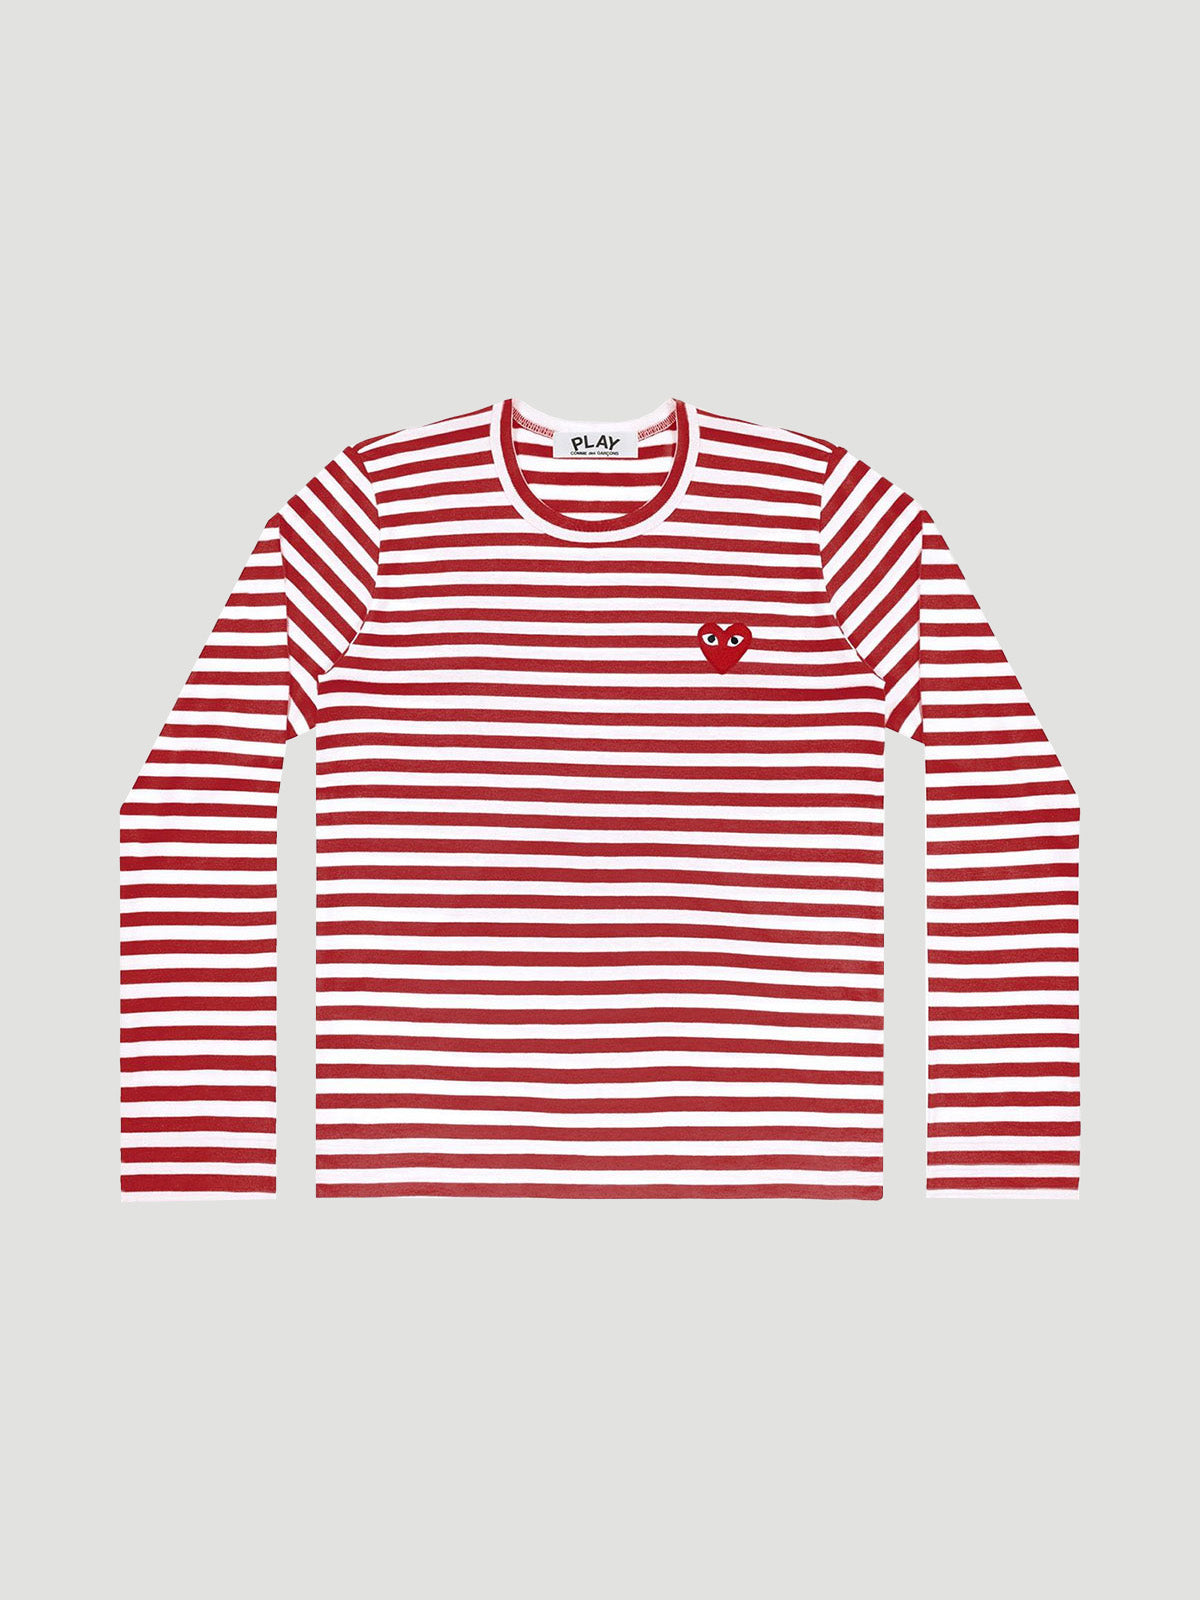 Play Comme des Garçons Men's Striped T-Shirt - Red/White